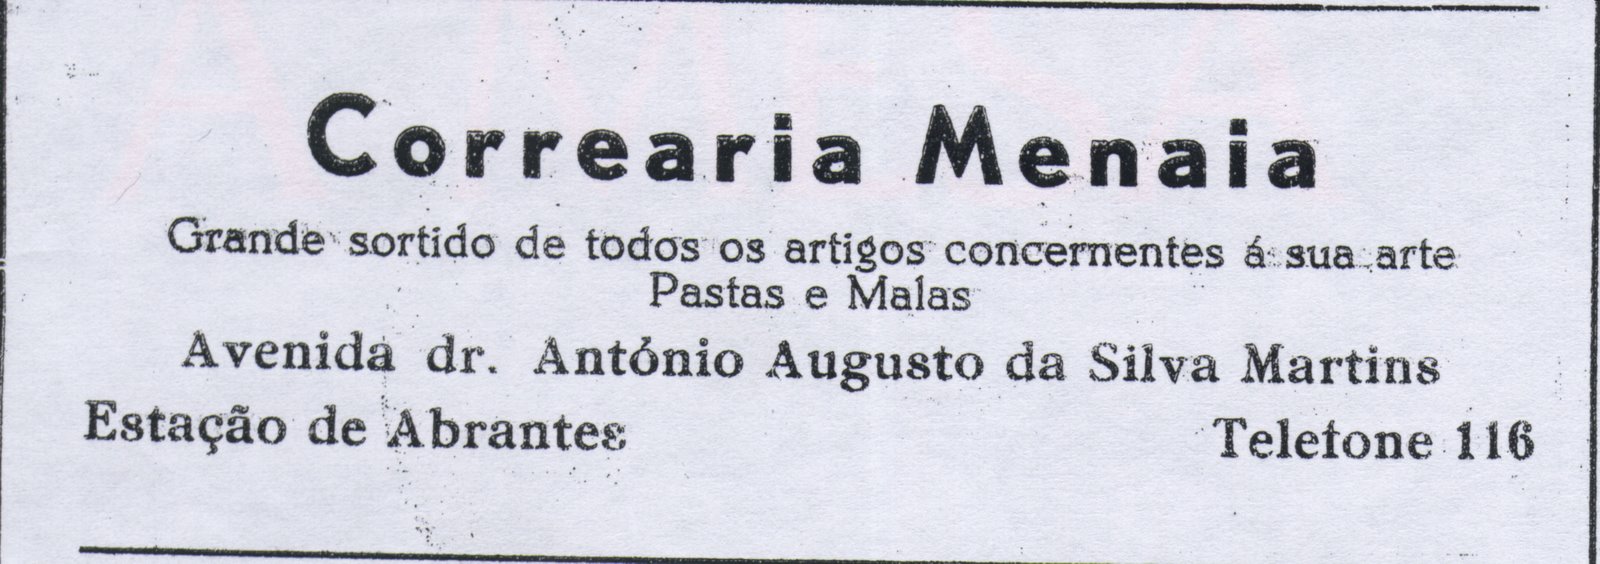 [Correaria+Menaia+-+1956+-+CA.jpg]